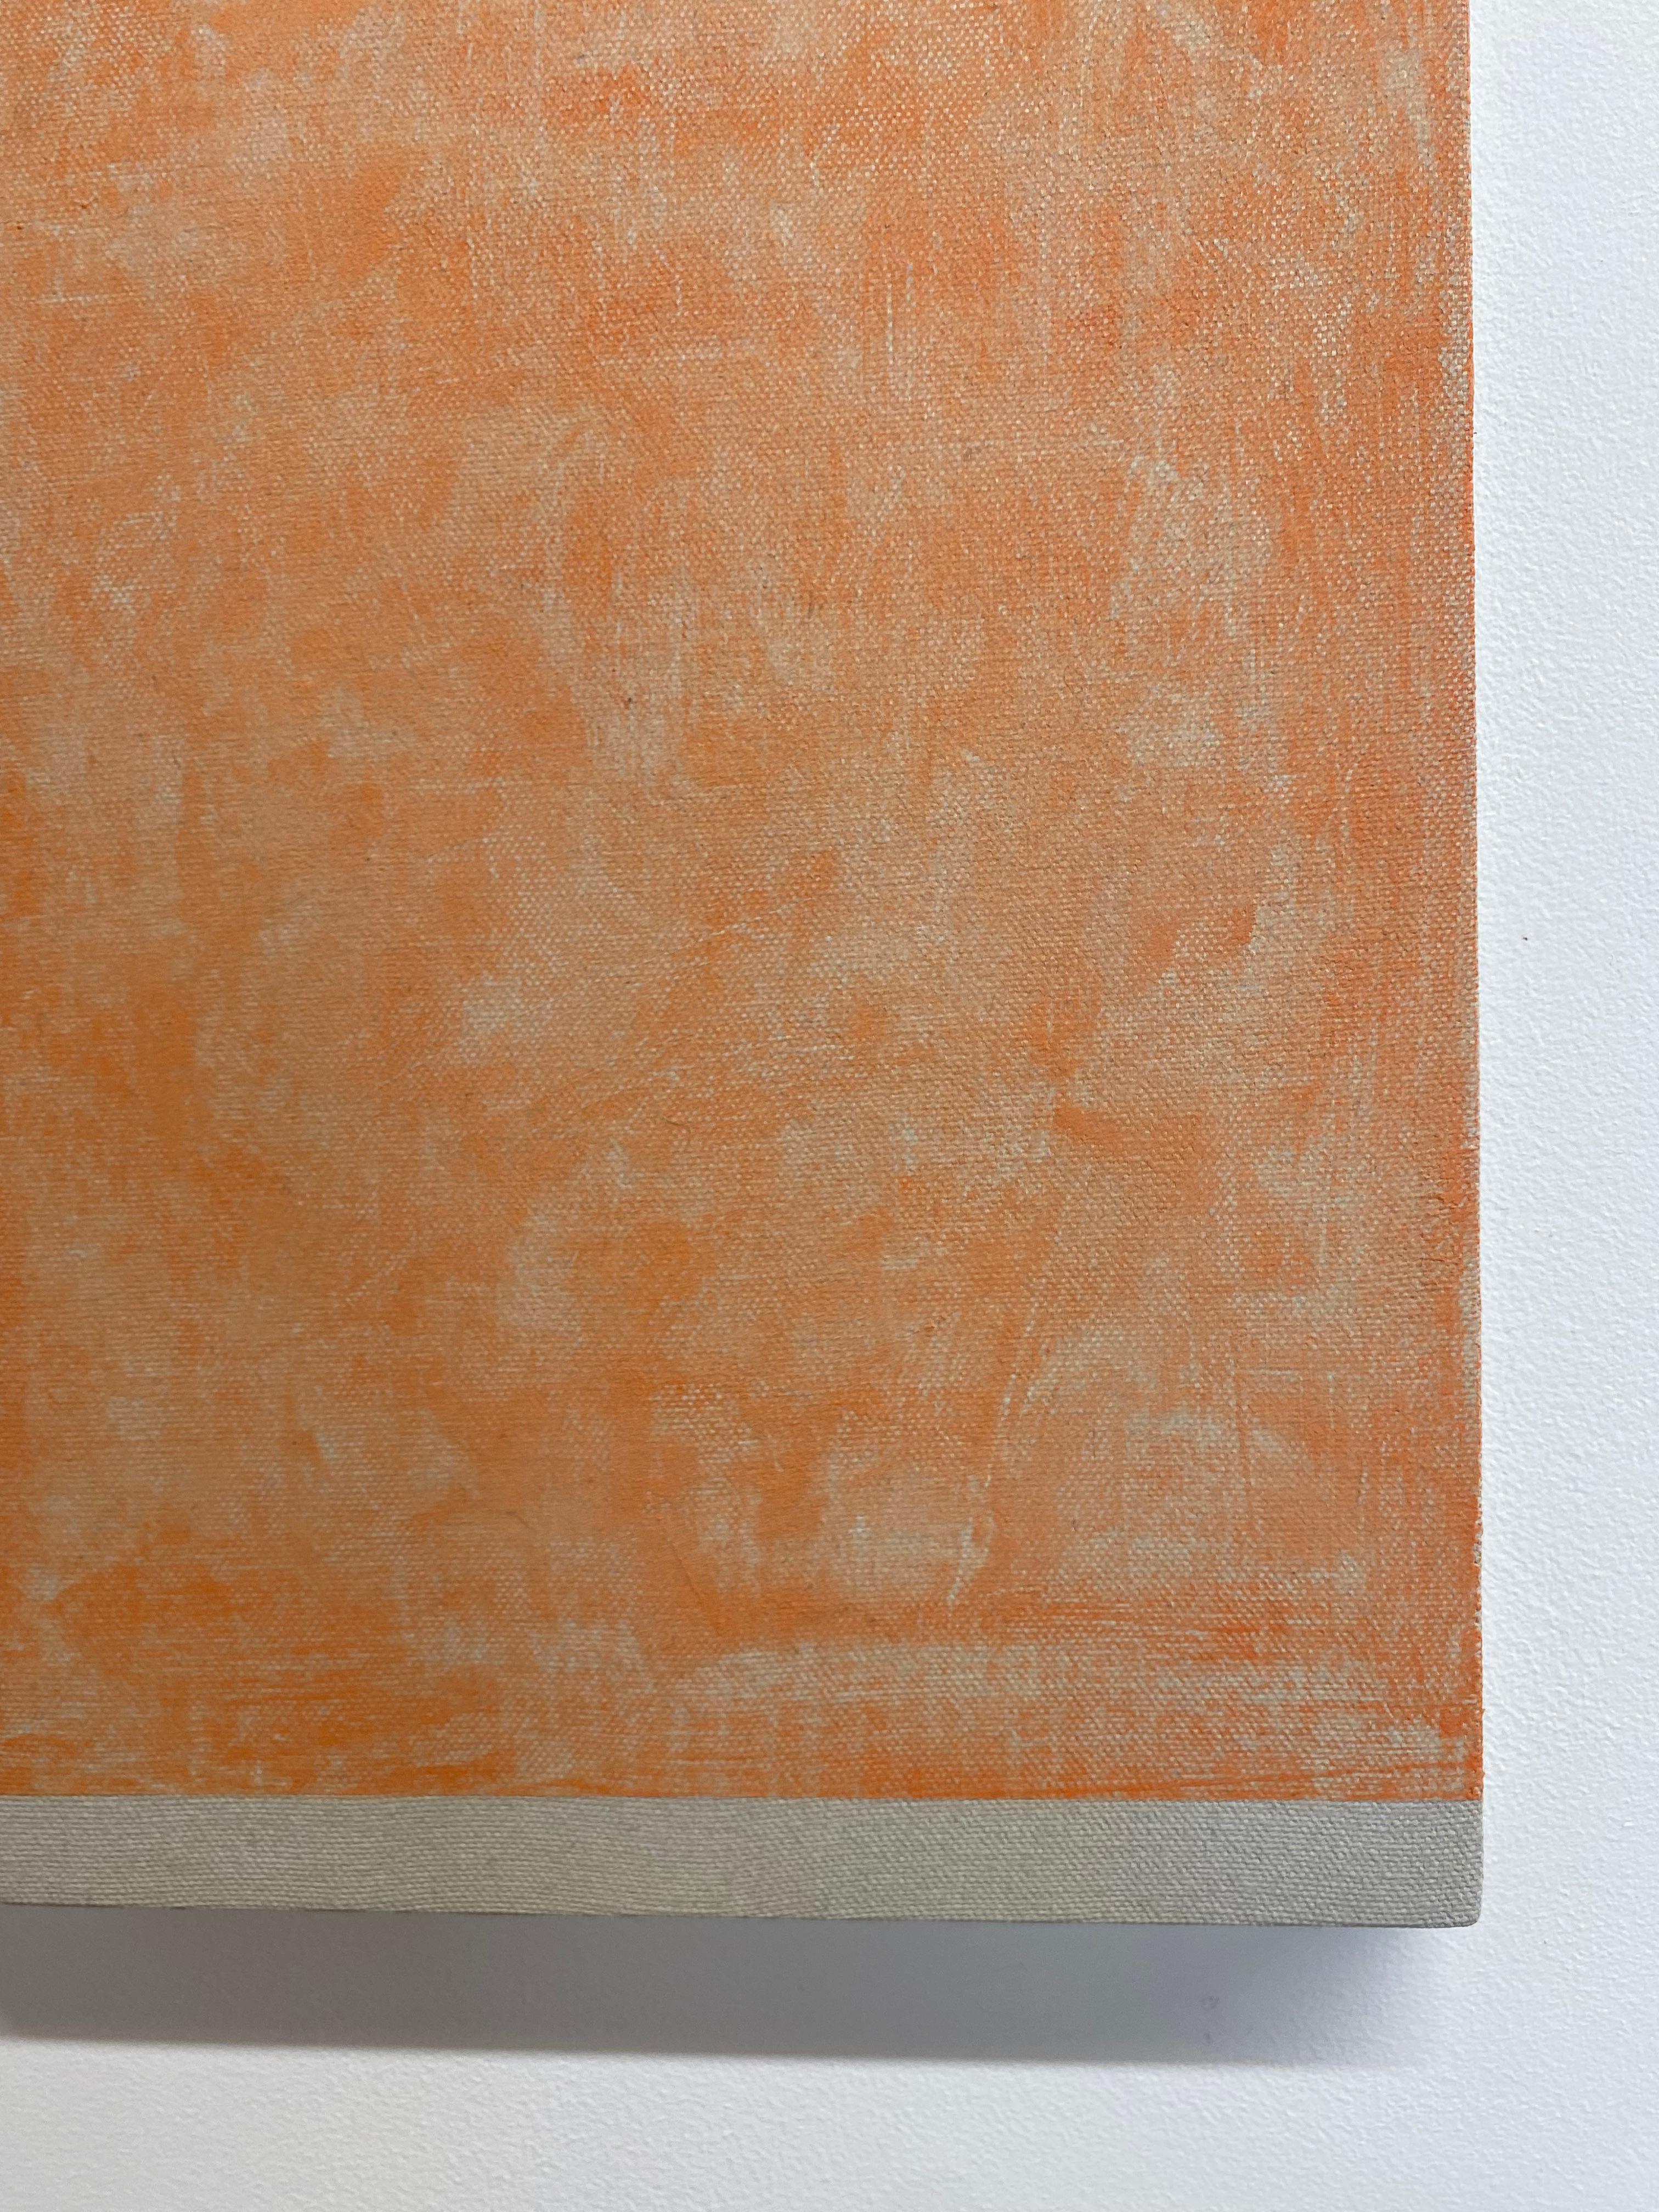 F30, Apricot Orange, Dark Lapis Blue, Geometric Abstract Shaped Panel Painting 5